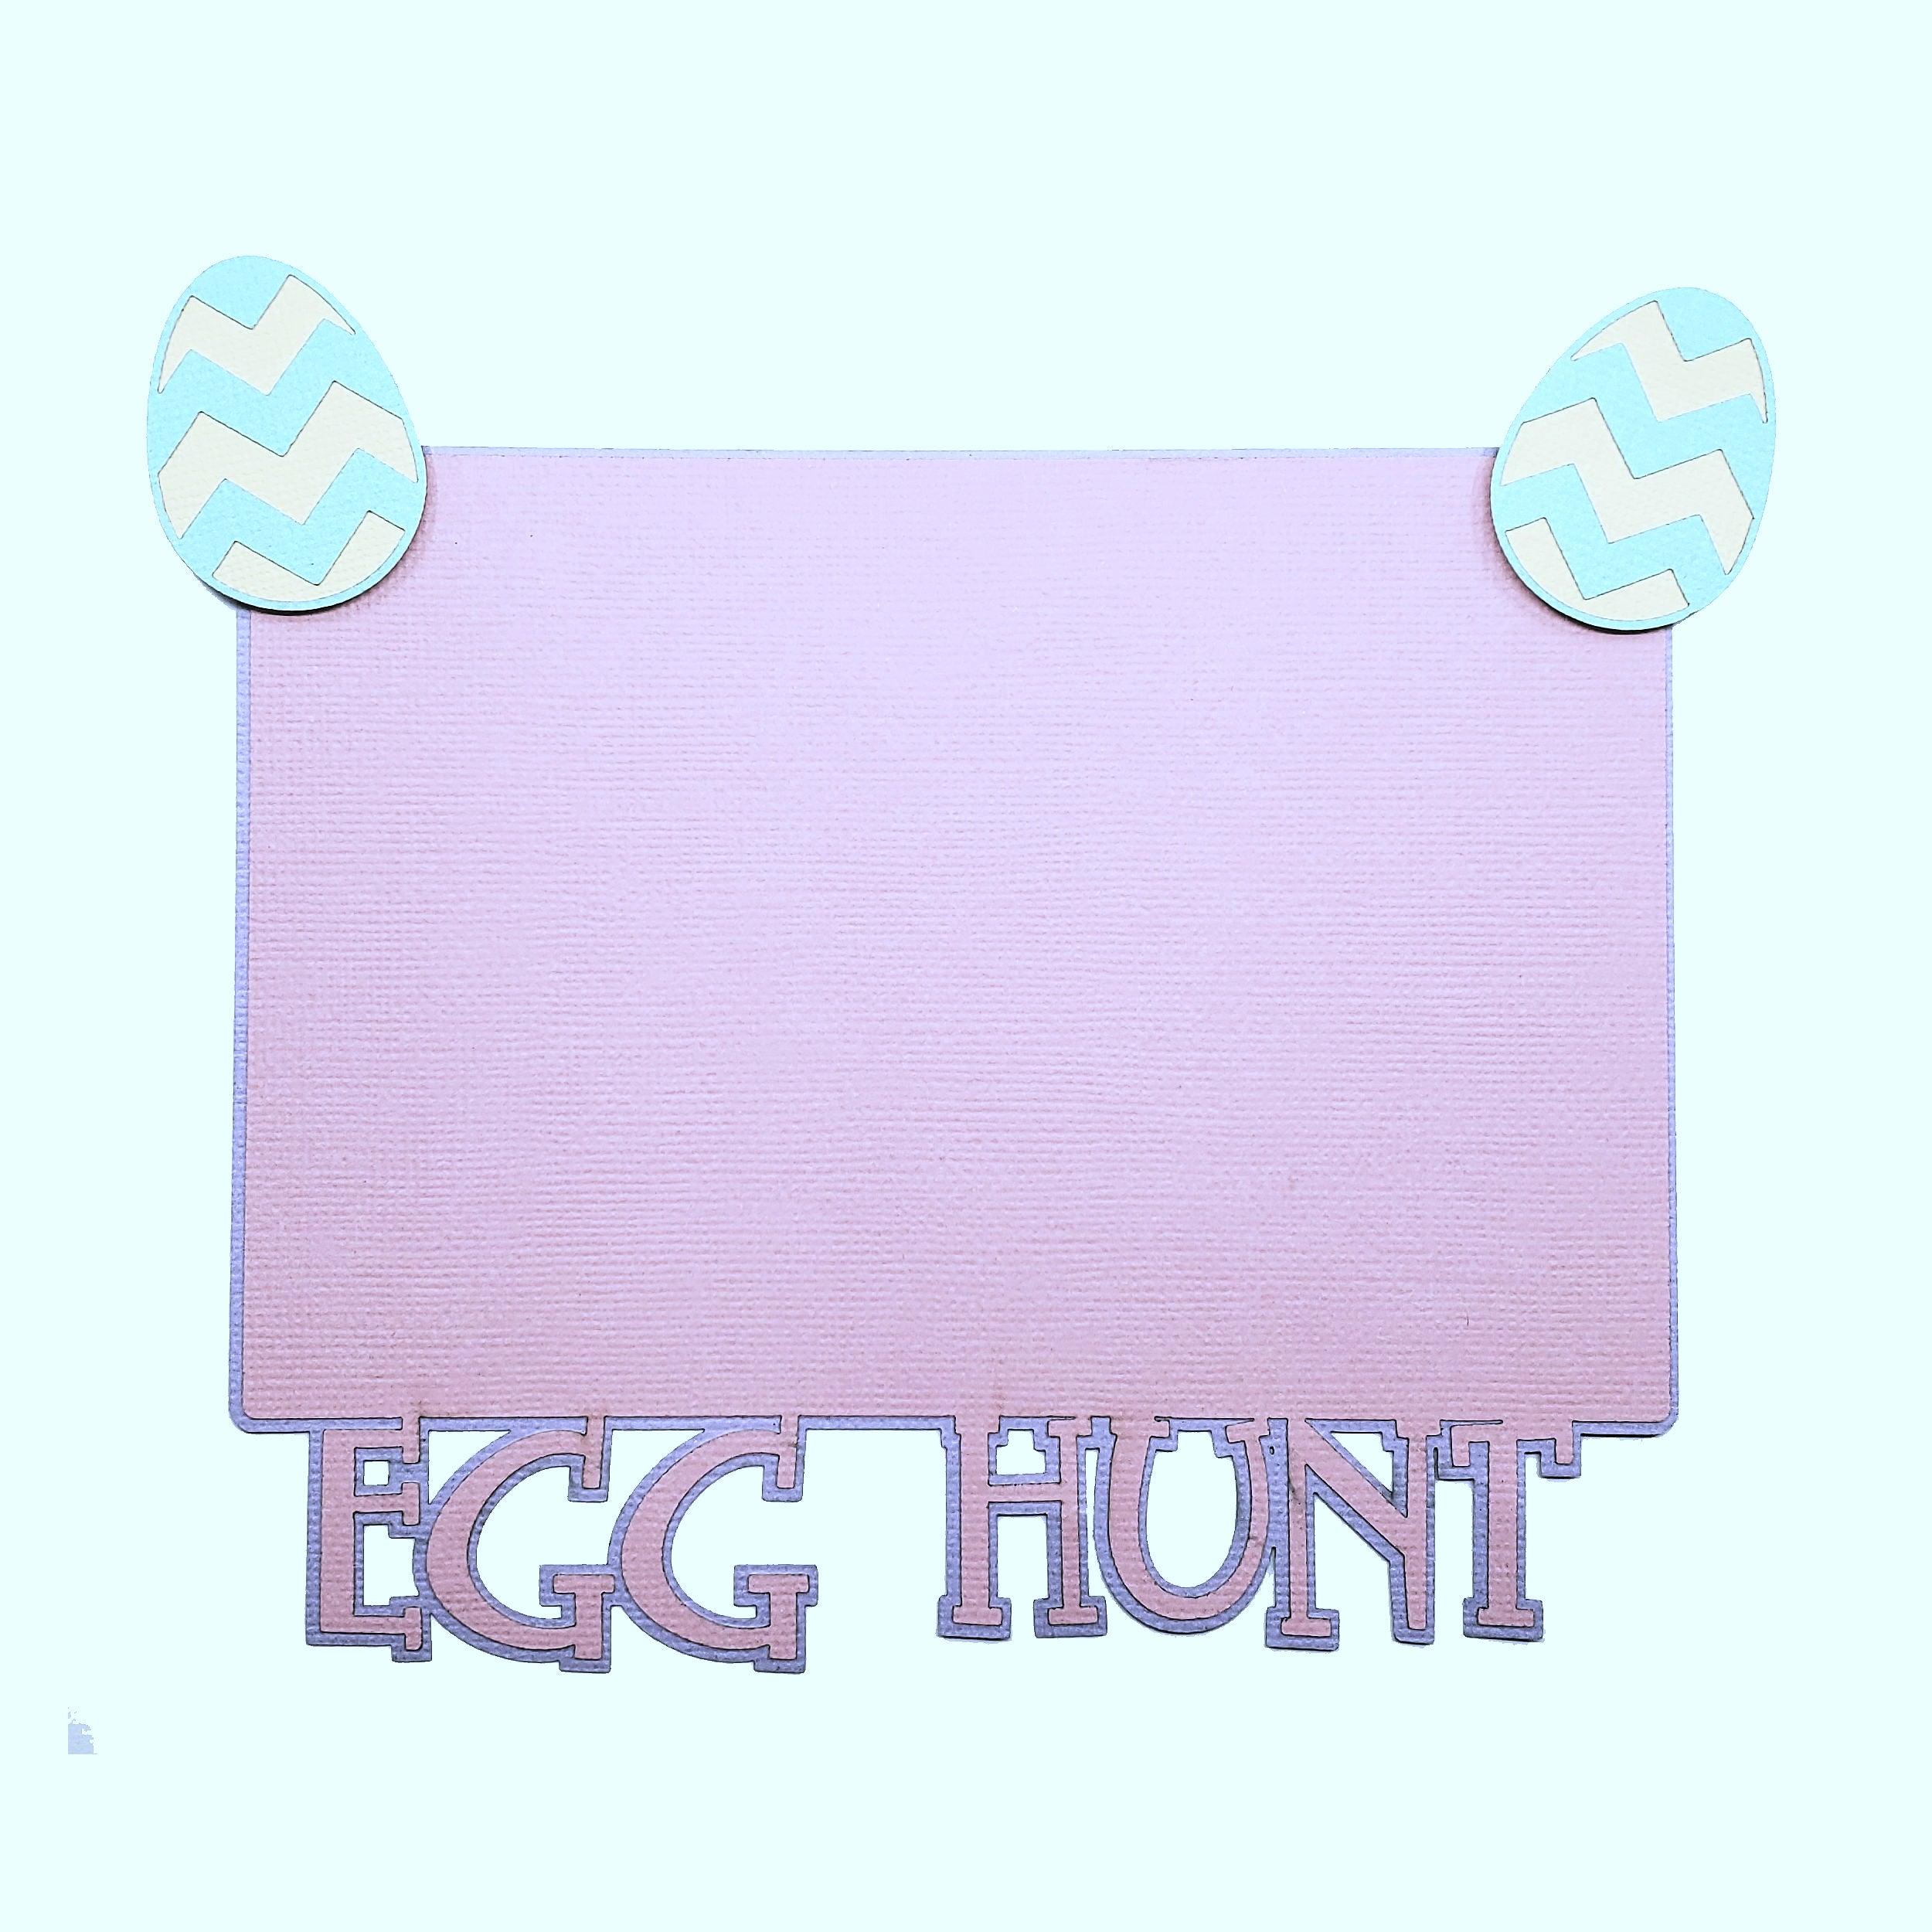 Egg Hunt 4.25 x 6.25 Laser Cut Photo Mat Frame Scrapbook Embellishment by SSC Laser Designs